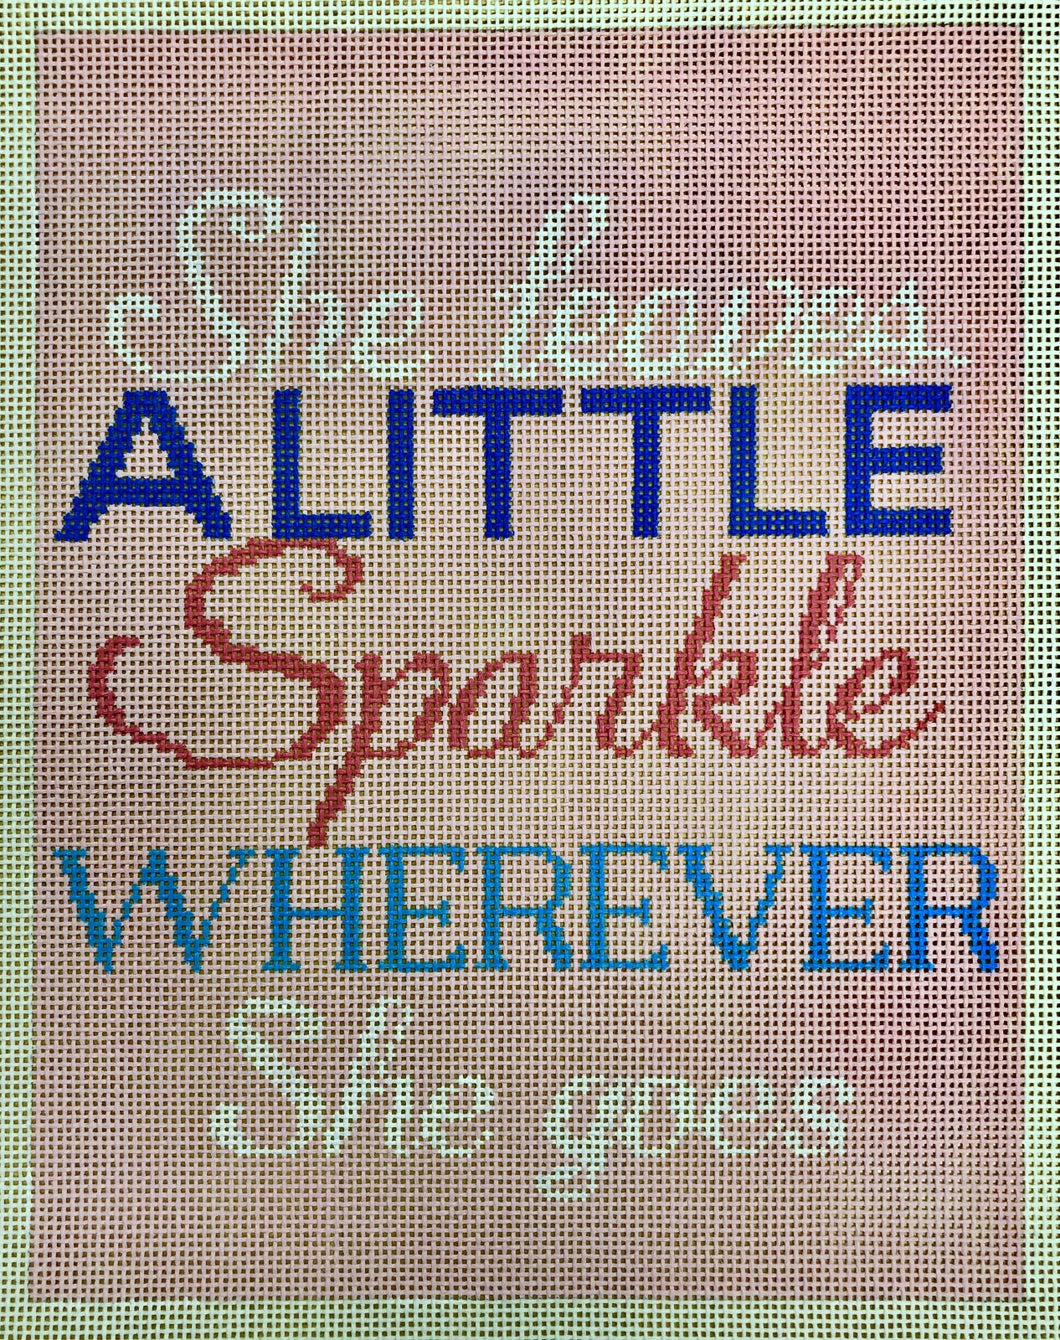 she leaves sparkle...